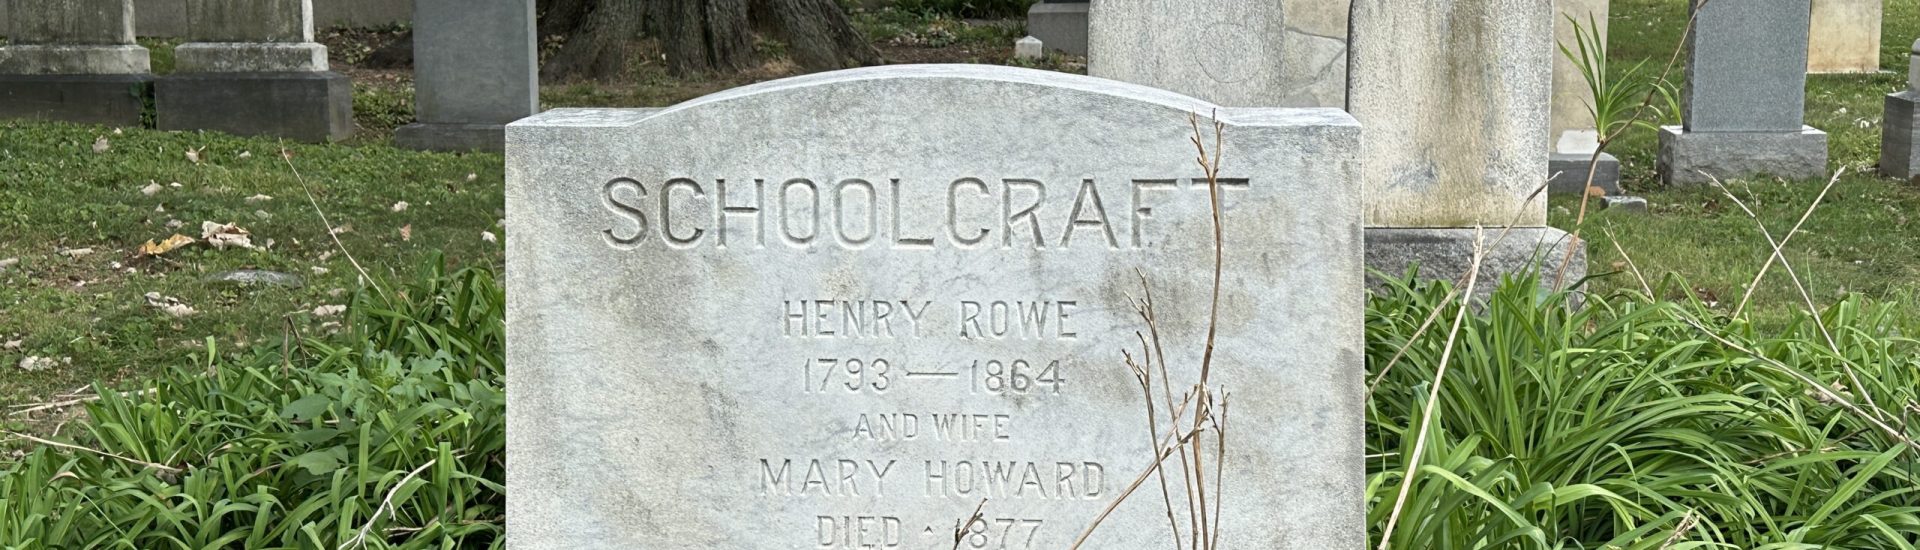 Henry Rowe Schoolcraft